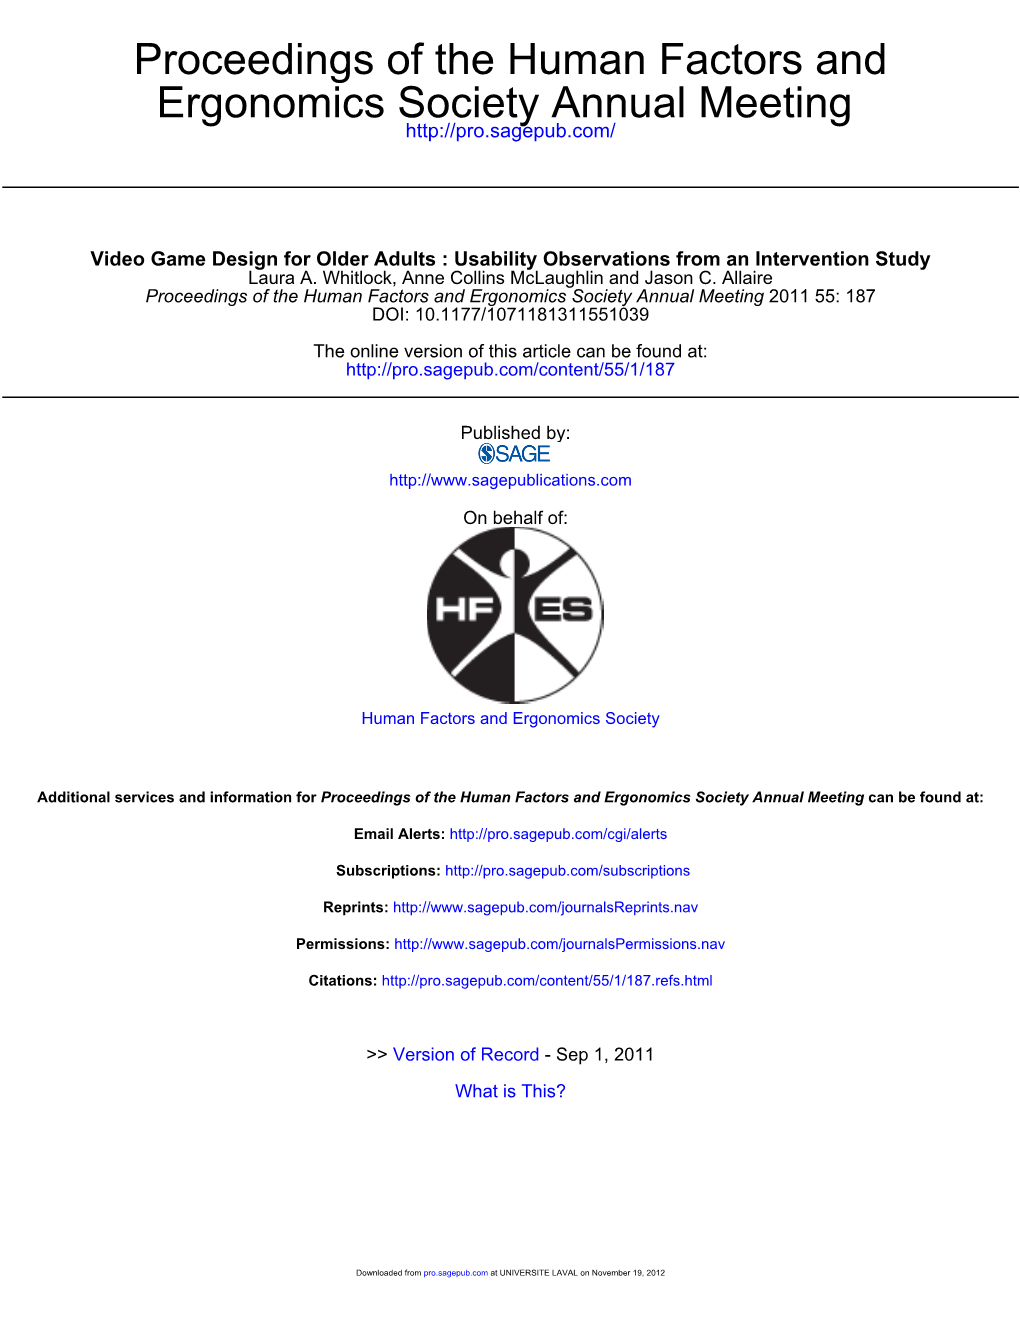 Ergonomics Society Annual Meeting Proceedings of the Human Factors